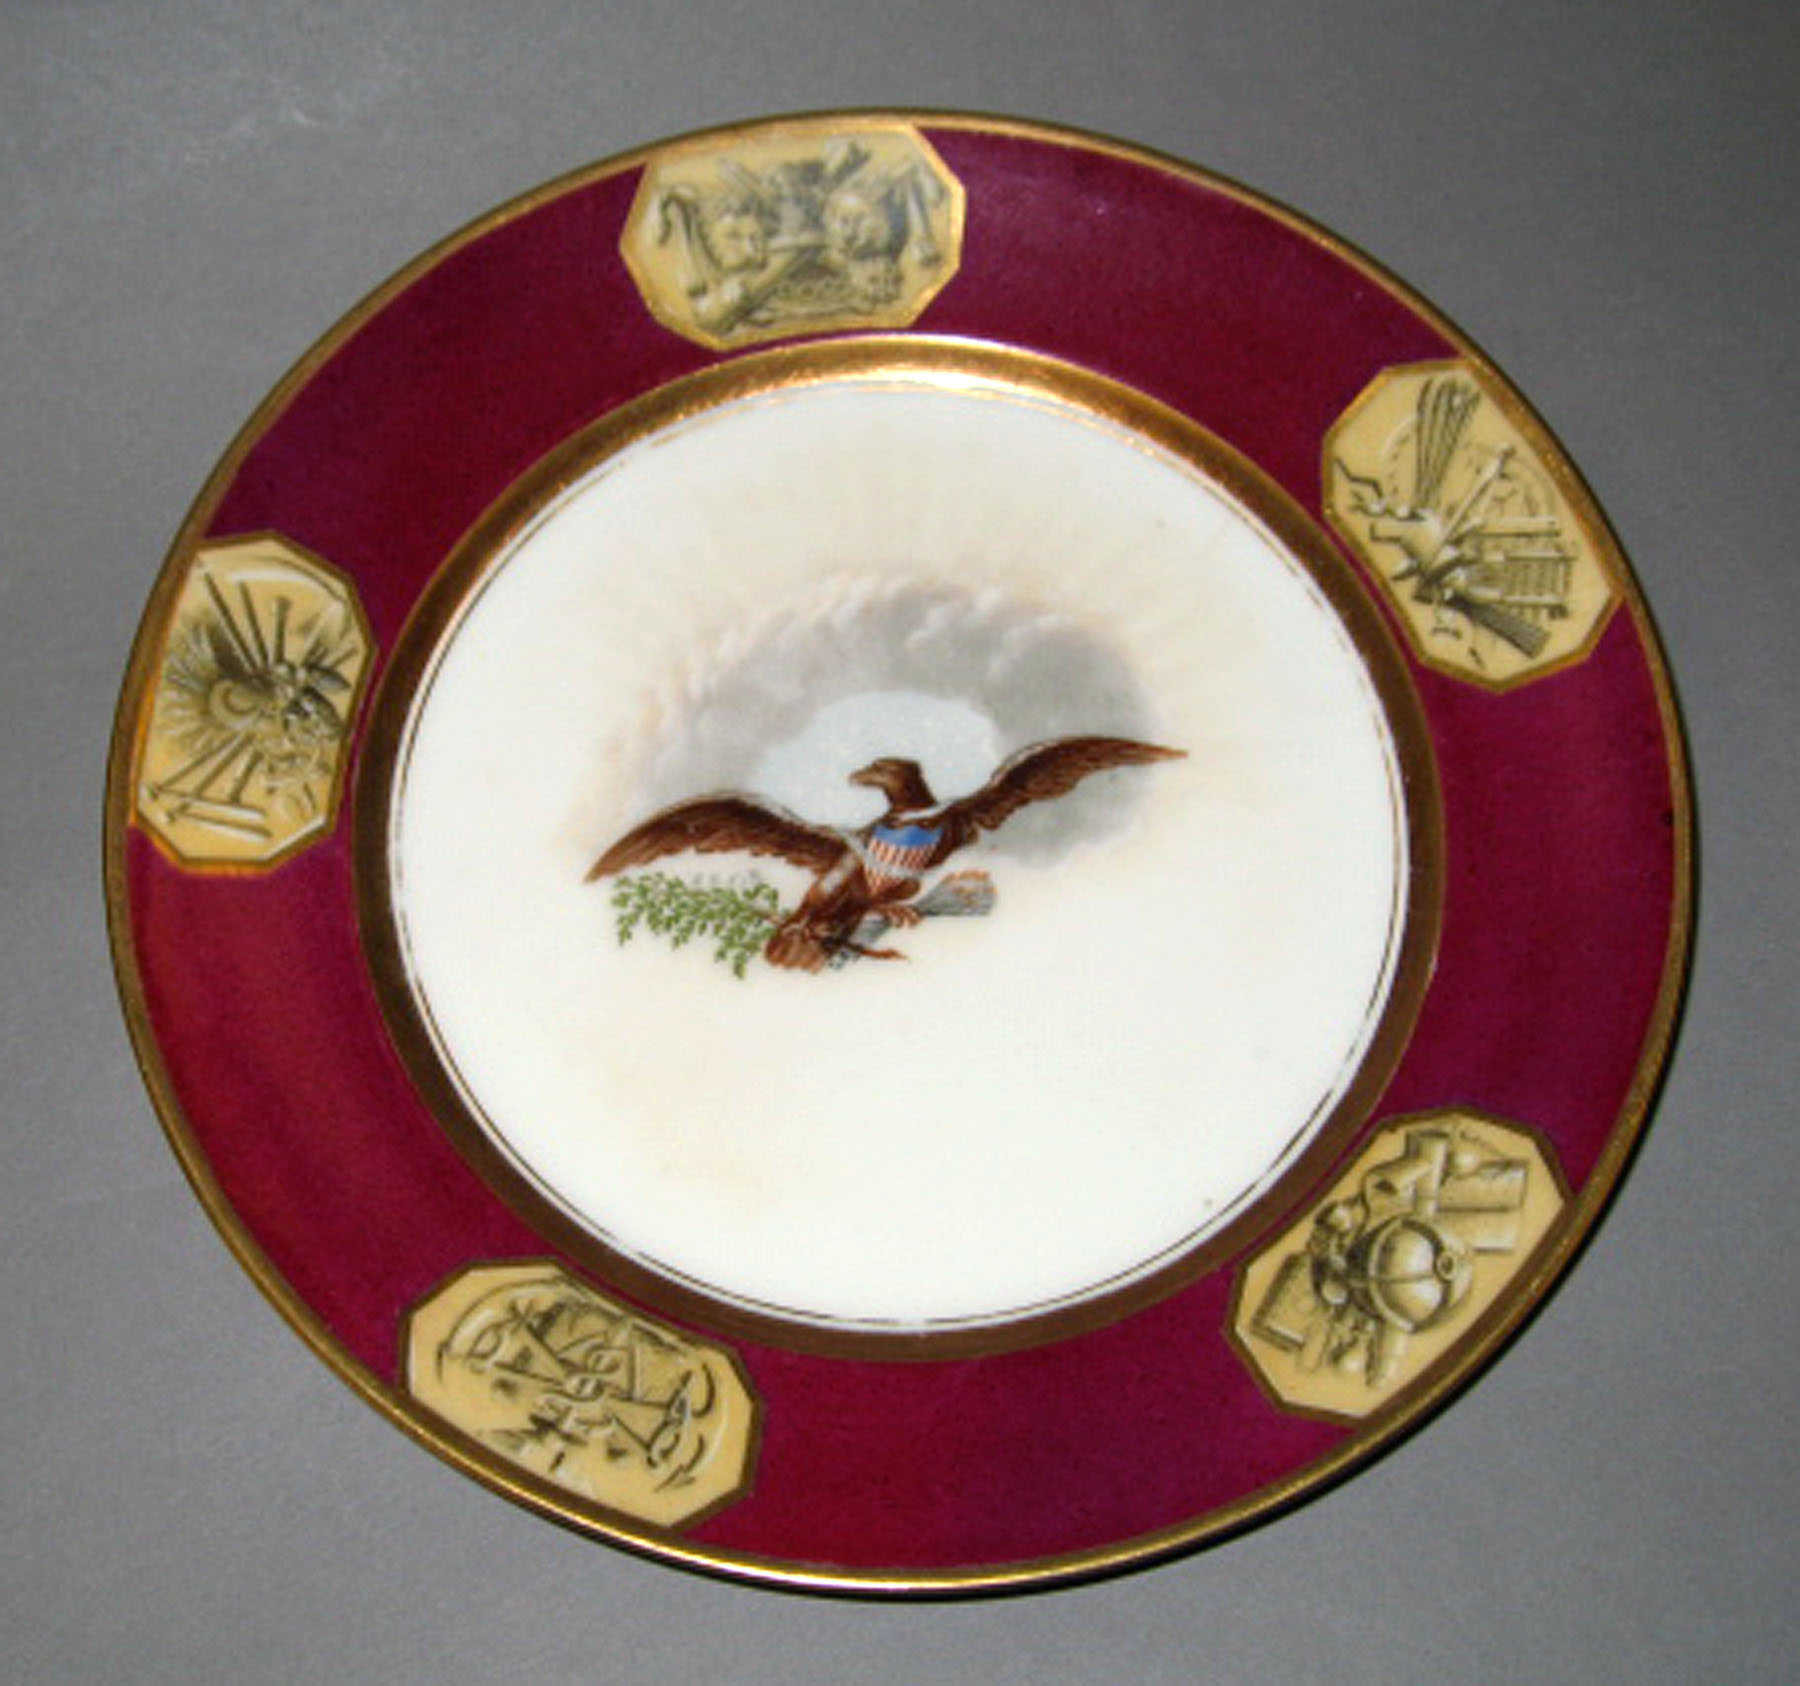 1958.1606.013 Porcelain plate